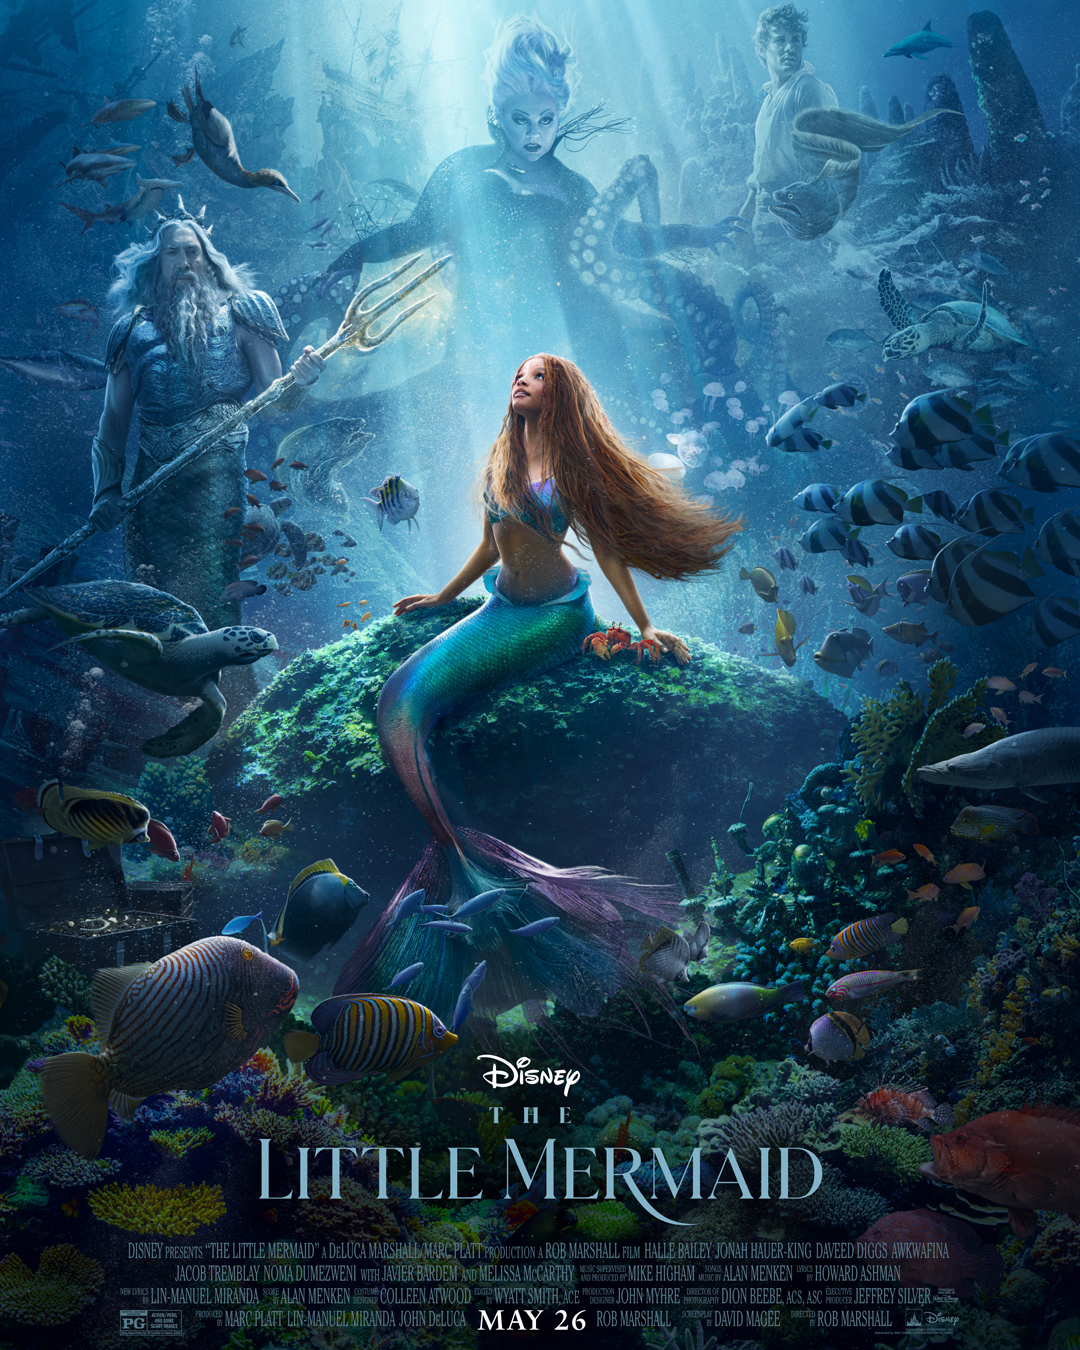 THe Little Mermaid, La Sirenita